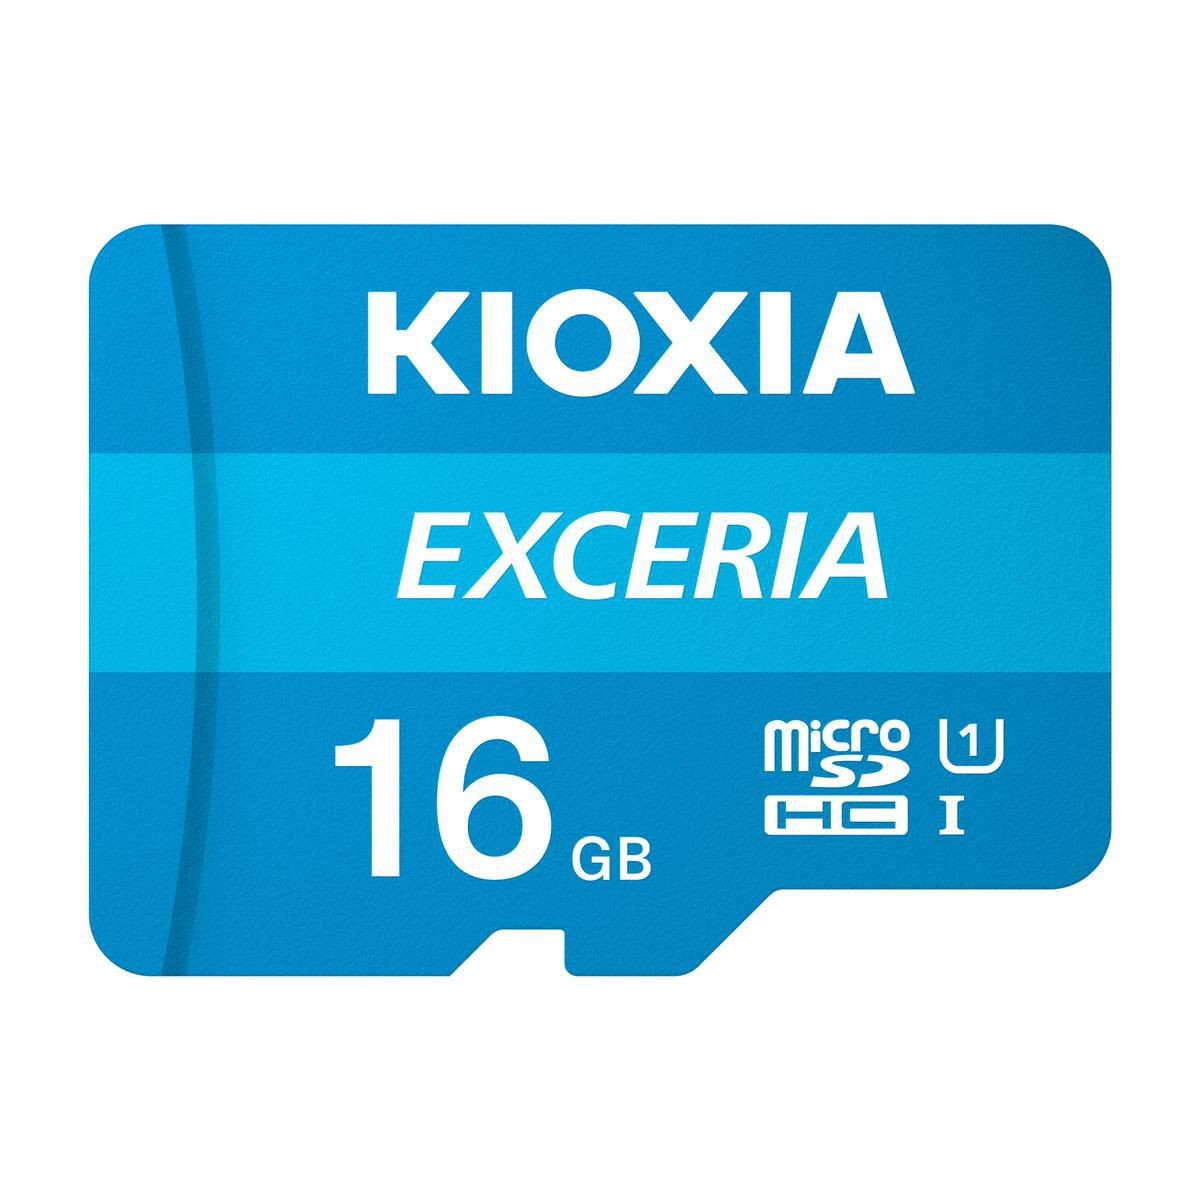 SD MicroSD Card 16GB Kioxia Exceria